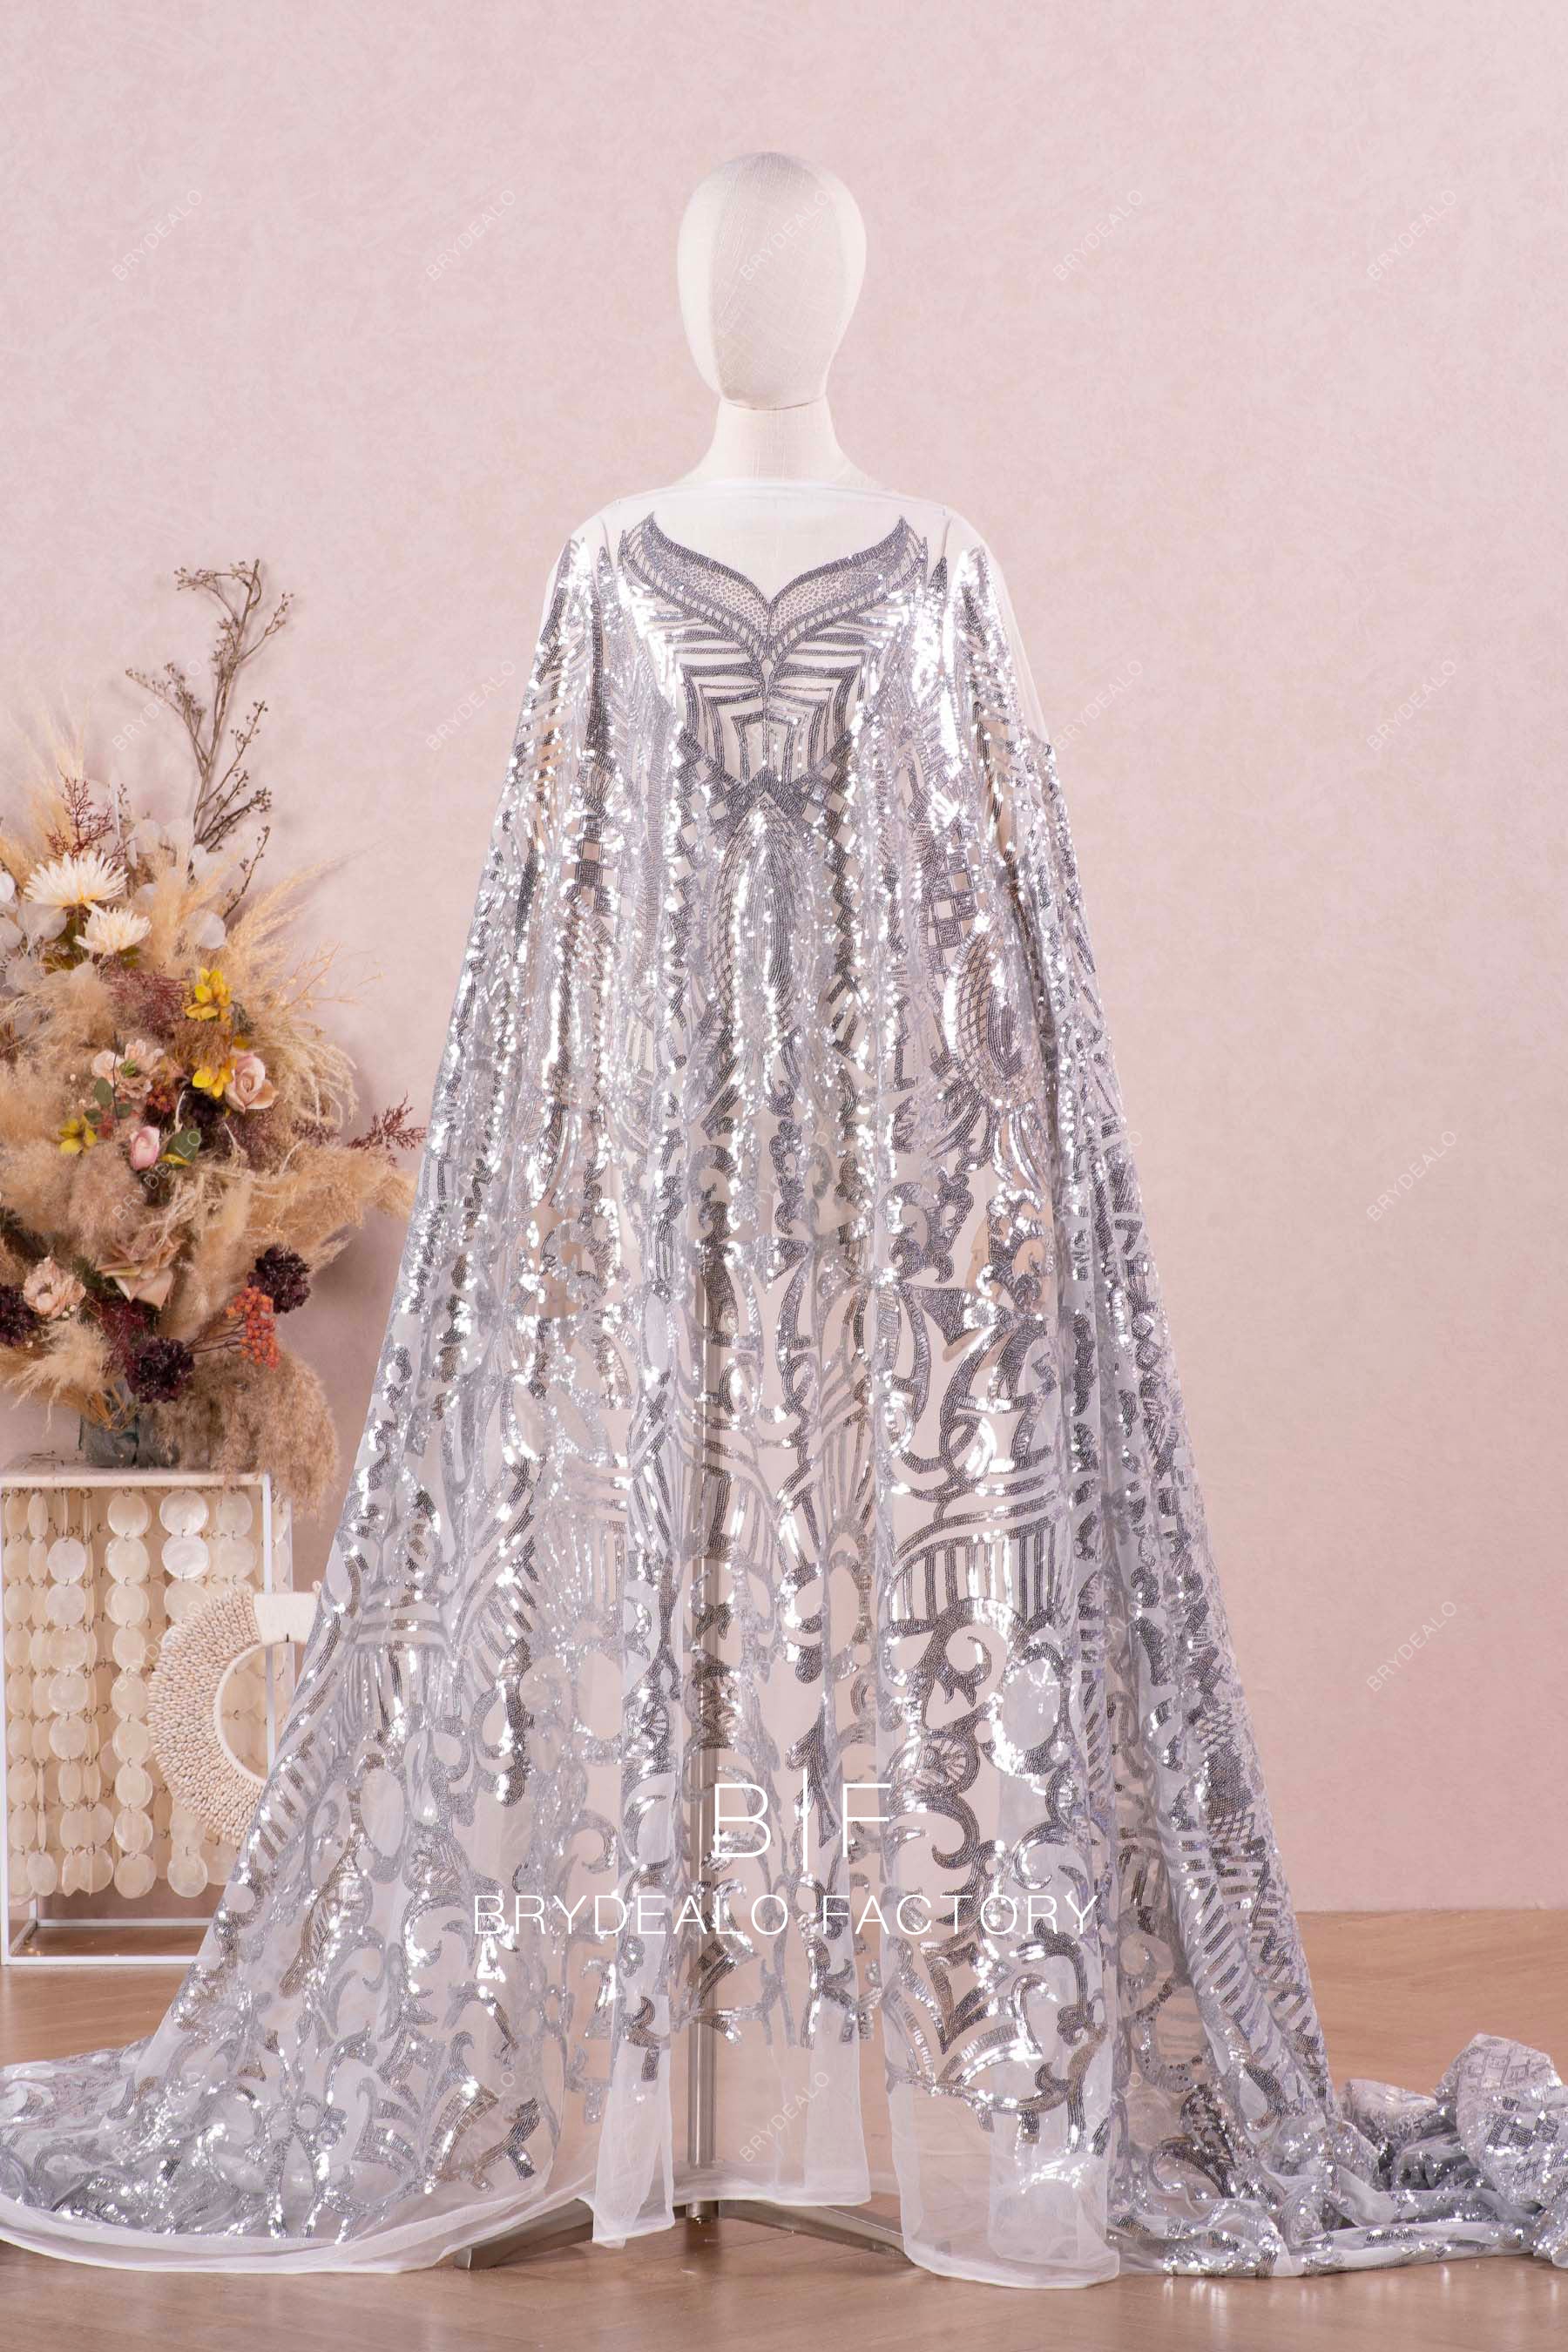 1M Glitter Sequin Tulle Fabric Shiny Gauze for Wedding Dress Veil DIY  Sewing Art